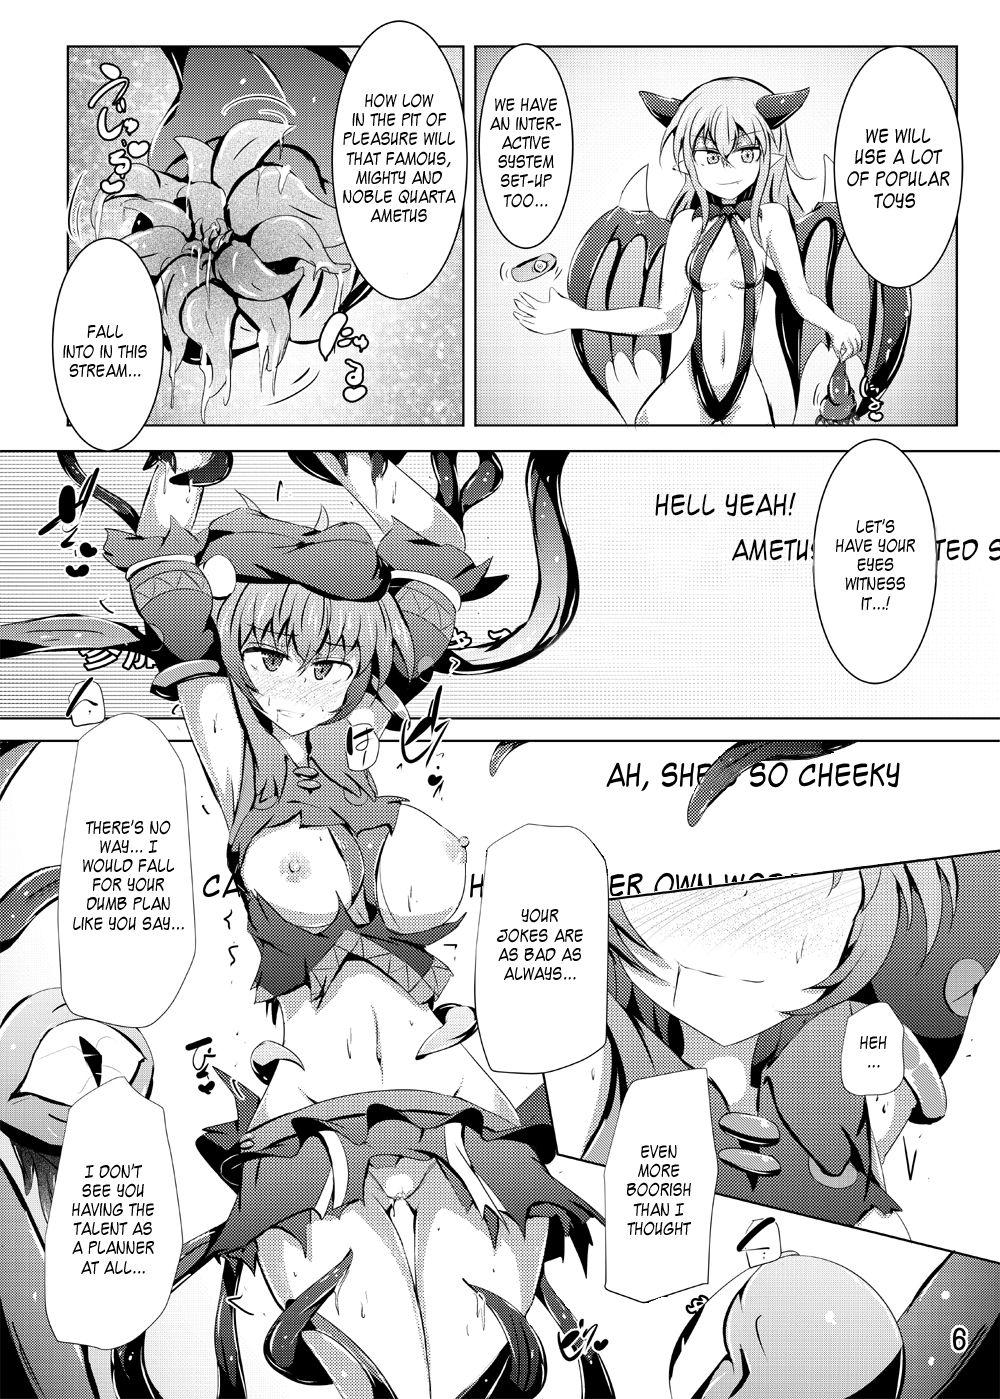 Whore Kuren Kishou Quarta Ametus #21 - Original 4some - Page 5